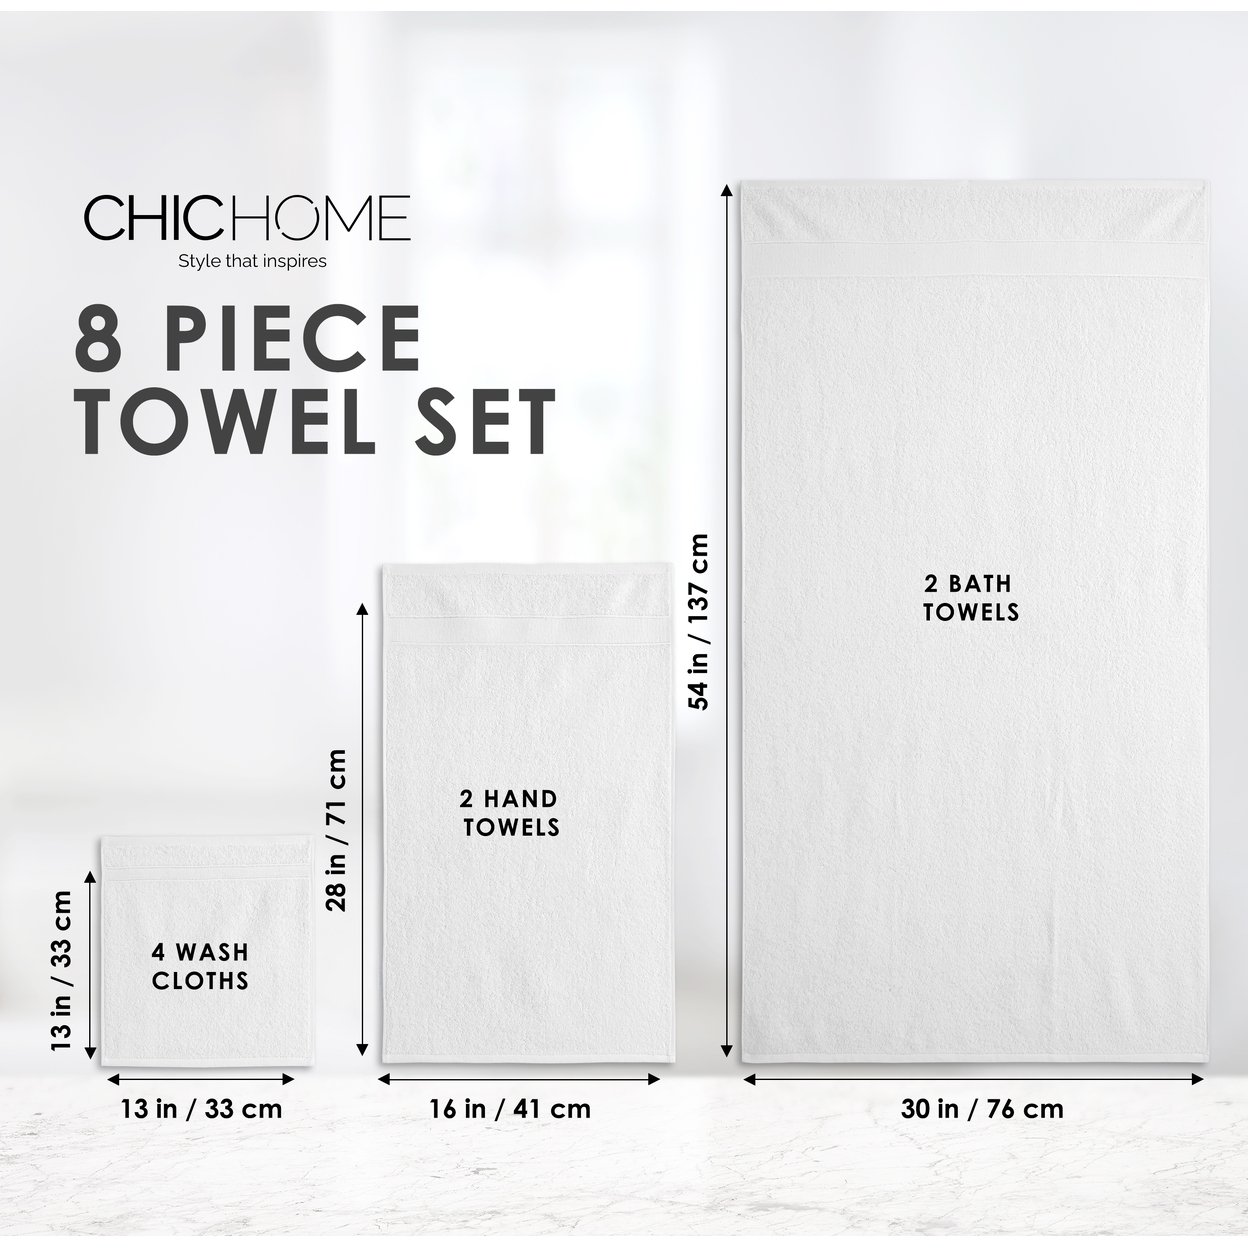 Chic Home Premium 8-Piece 100% Pure Turkish Cotton Towel Set, Woven Dobby Border Design, OEKO-TEX Standard 100 Certified - Taupe